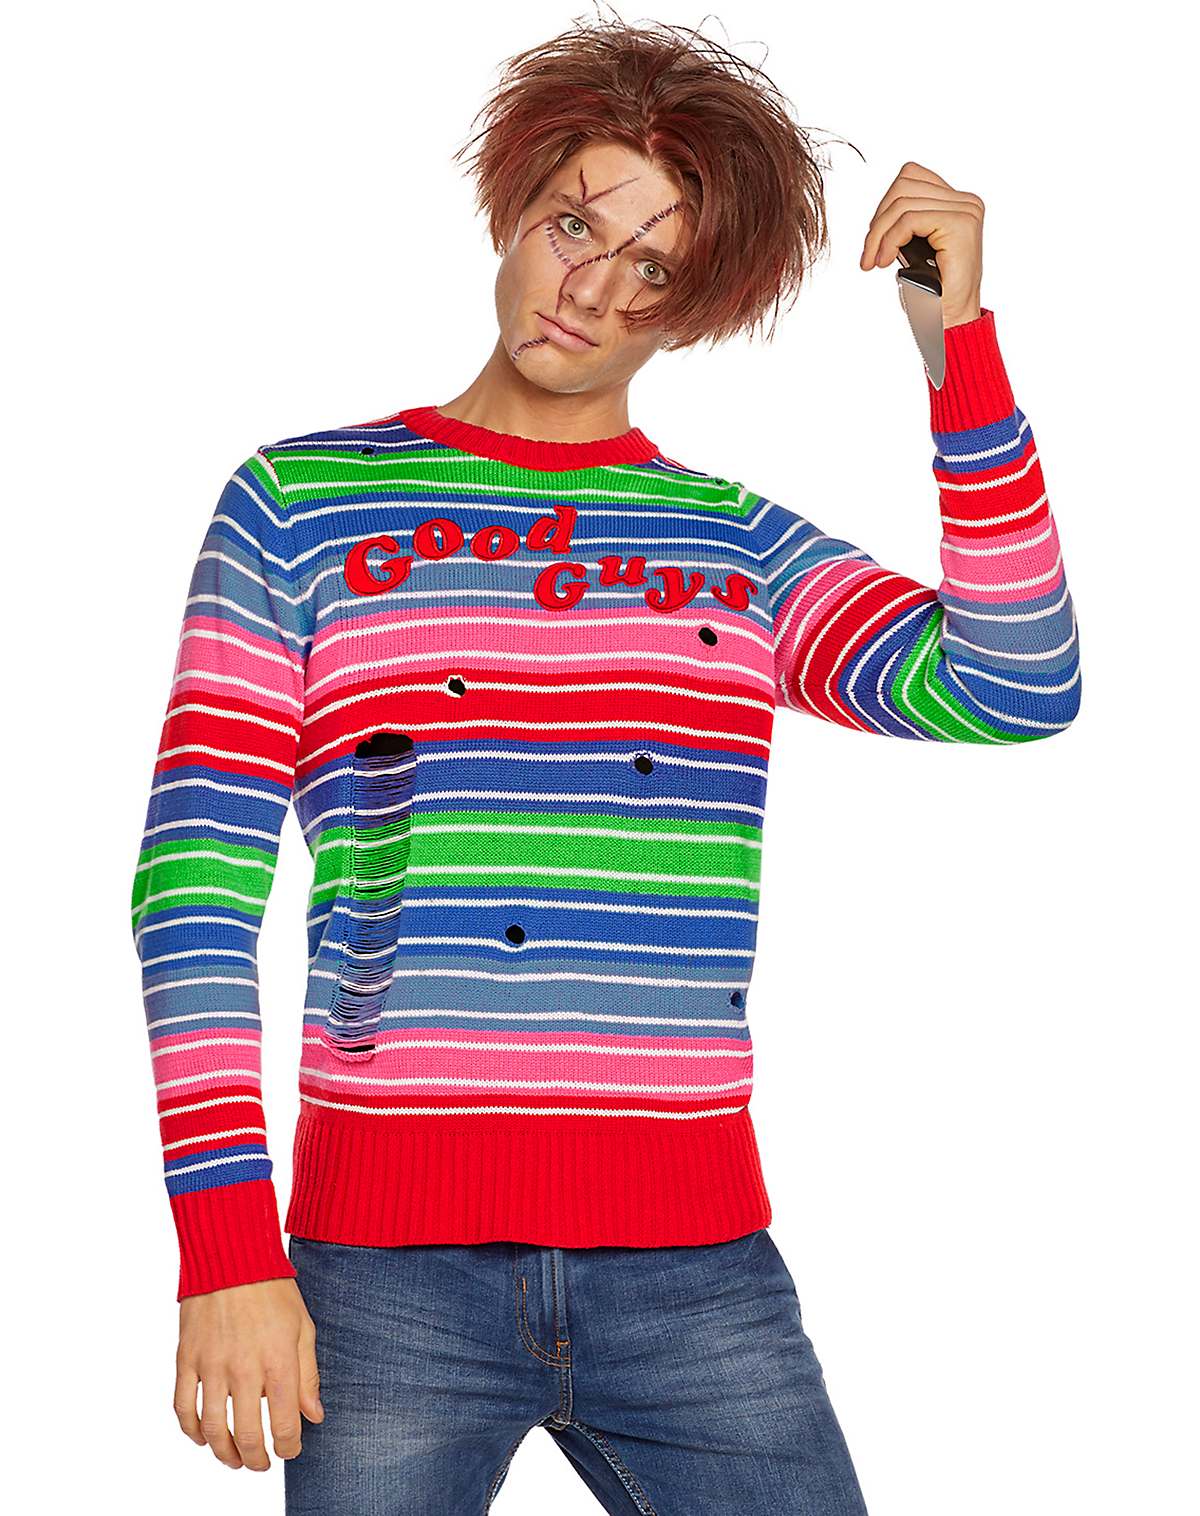 Adult Chucky Sweater